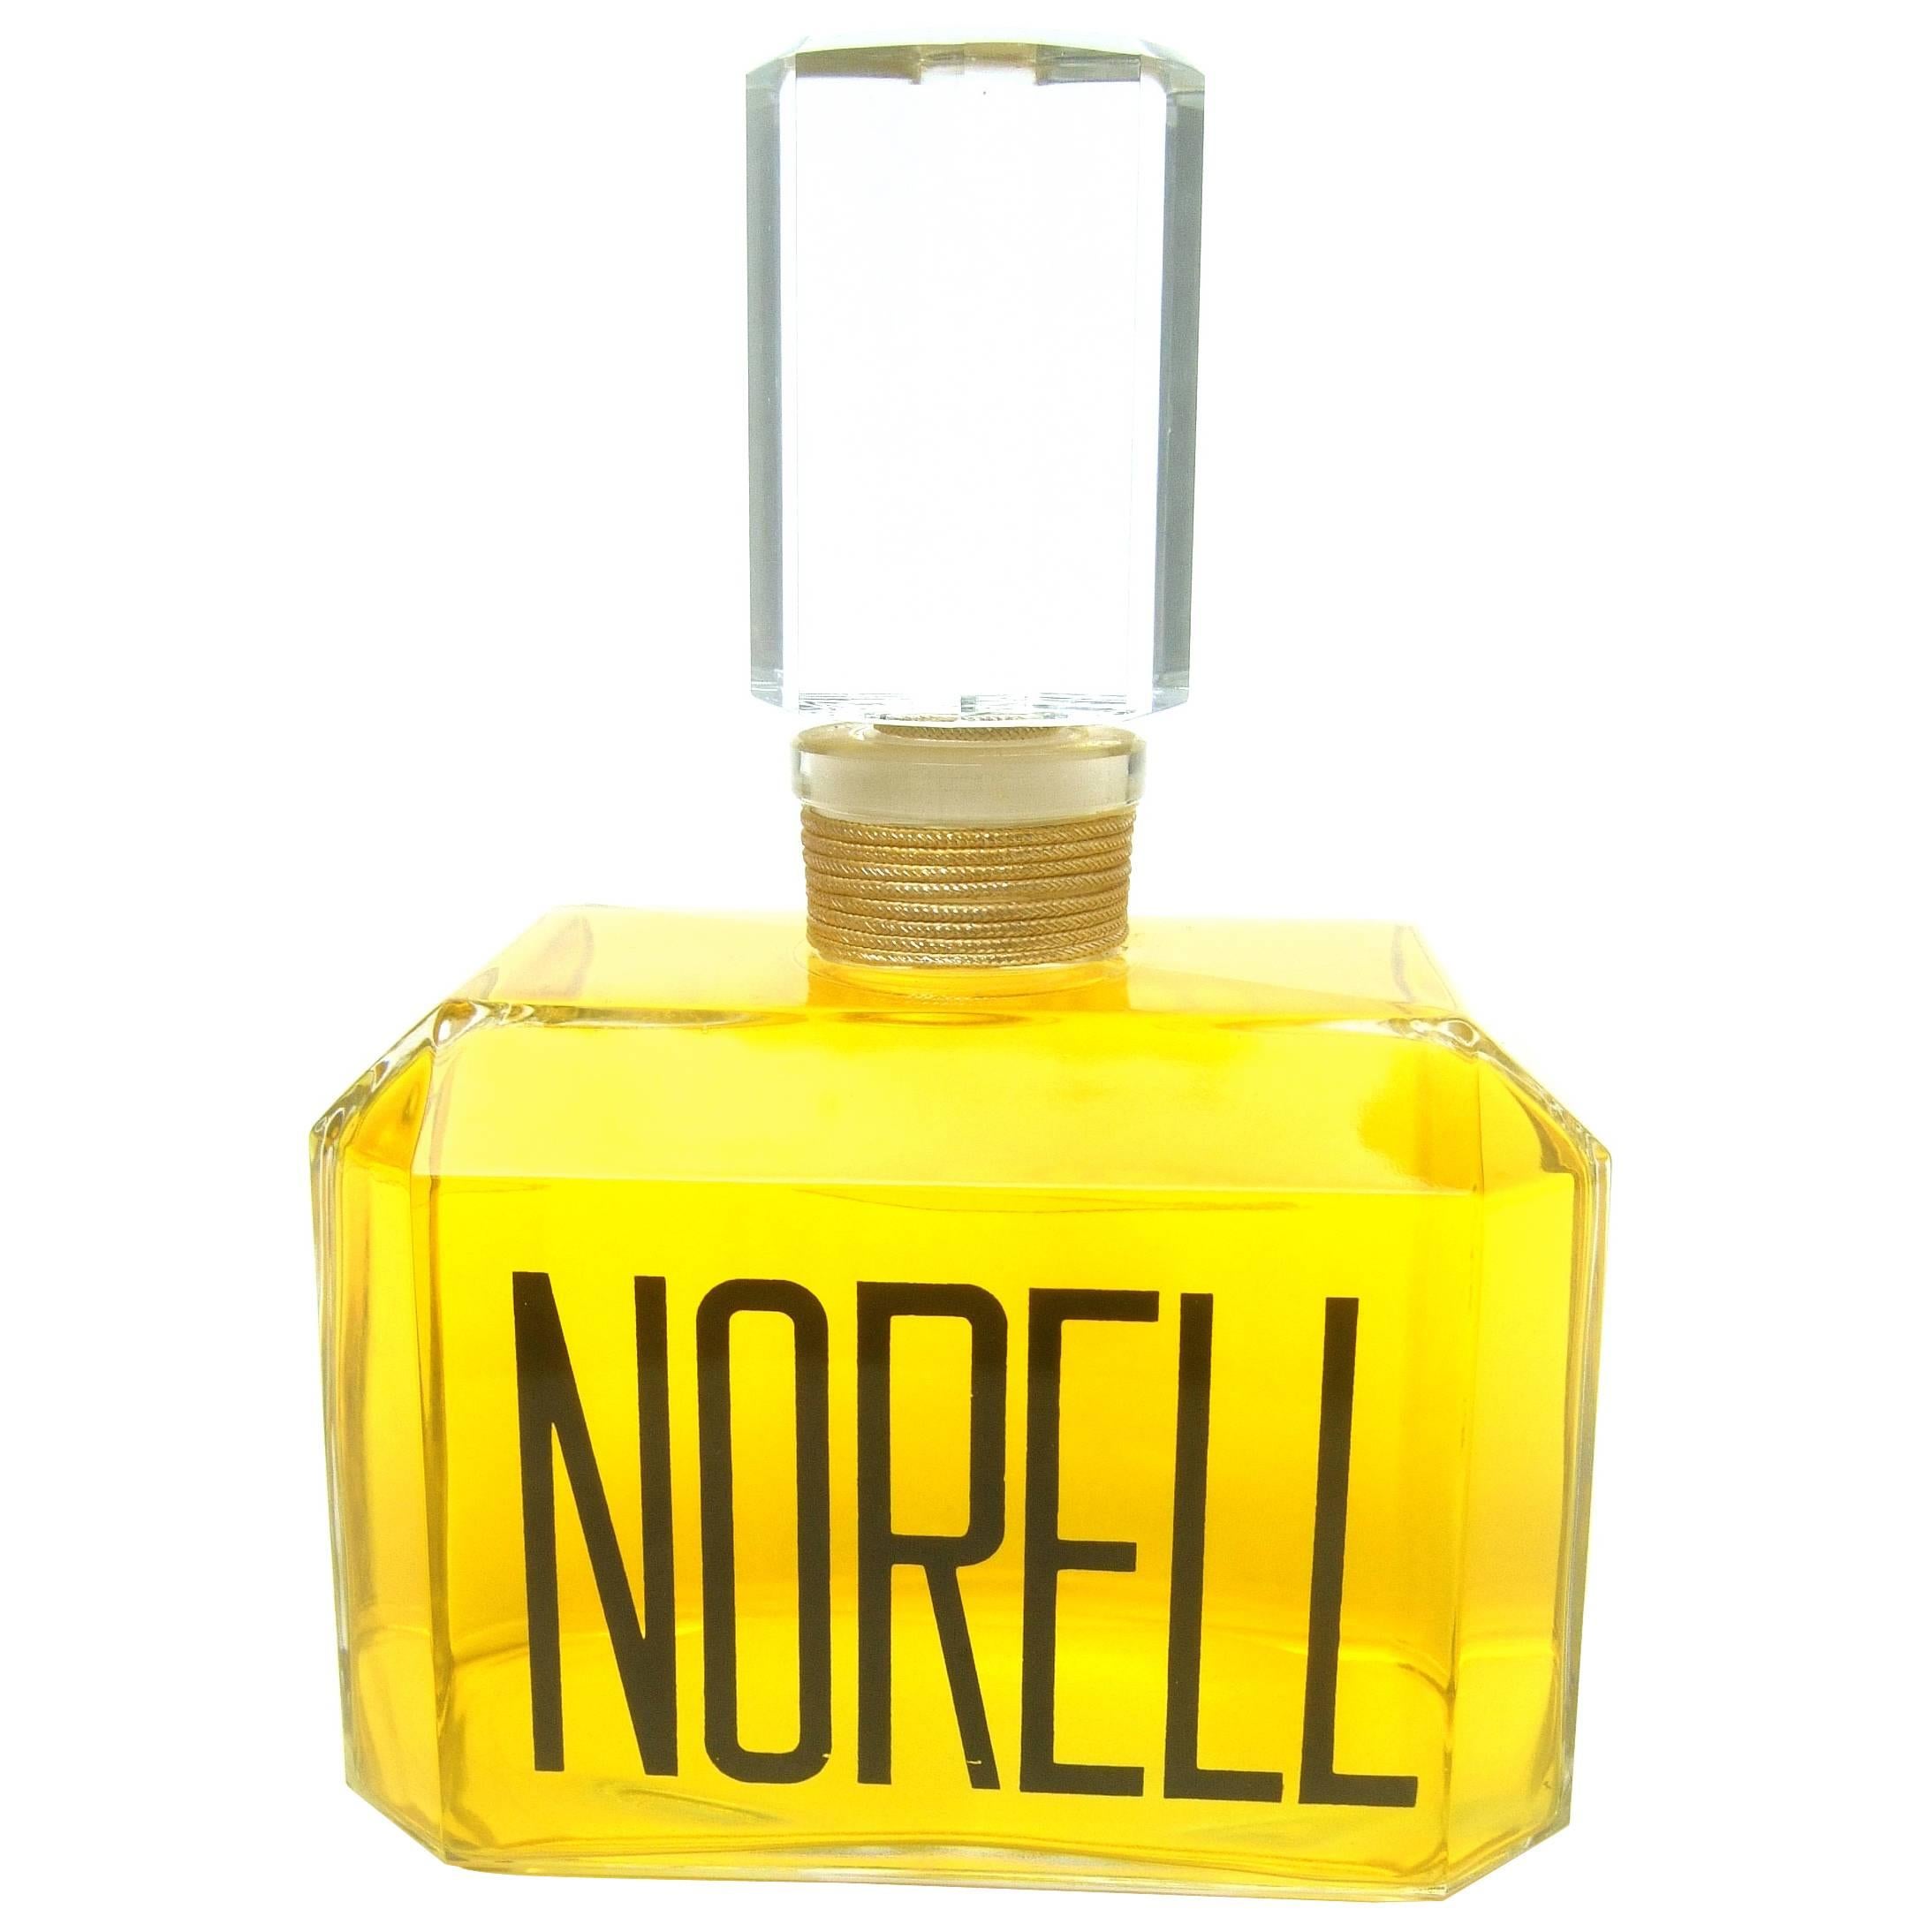 Norell Sleek Large Crystal Factice Fragrance Display Bottle 